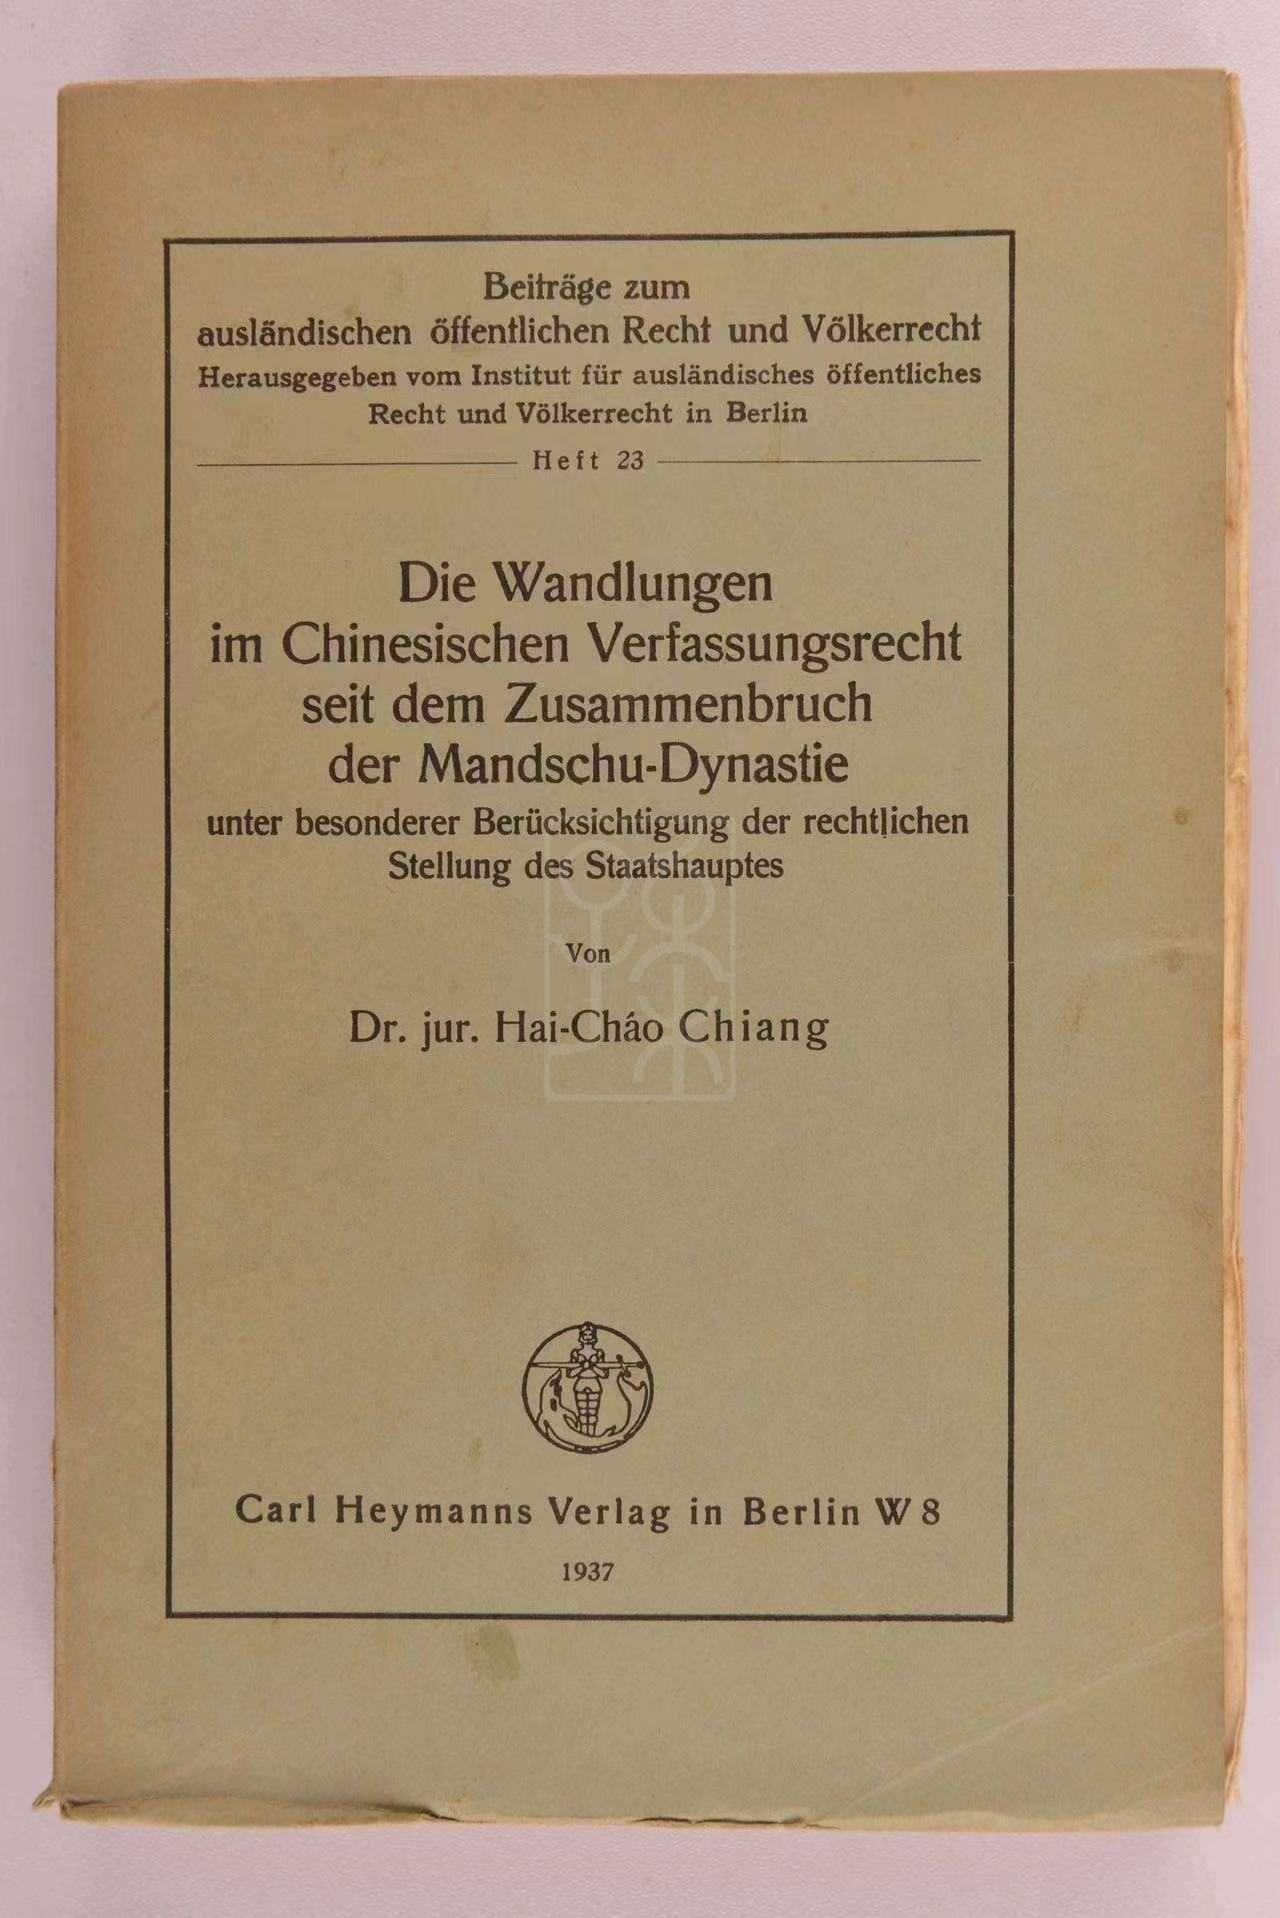 1937年版《推翻满清以来的中国宪法变化》（Die Wandlungen im Chinesischen Verfassungsrecht seit dem Zusammenbruch der Mandschu-Dynastie）